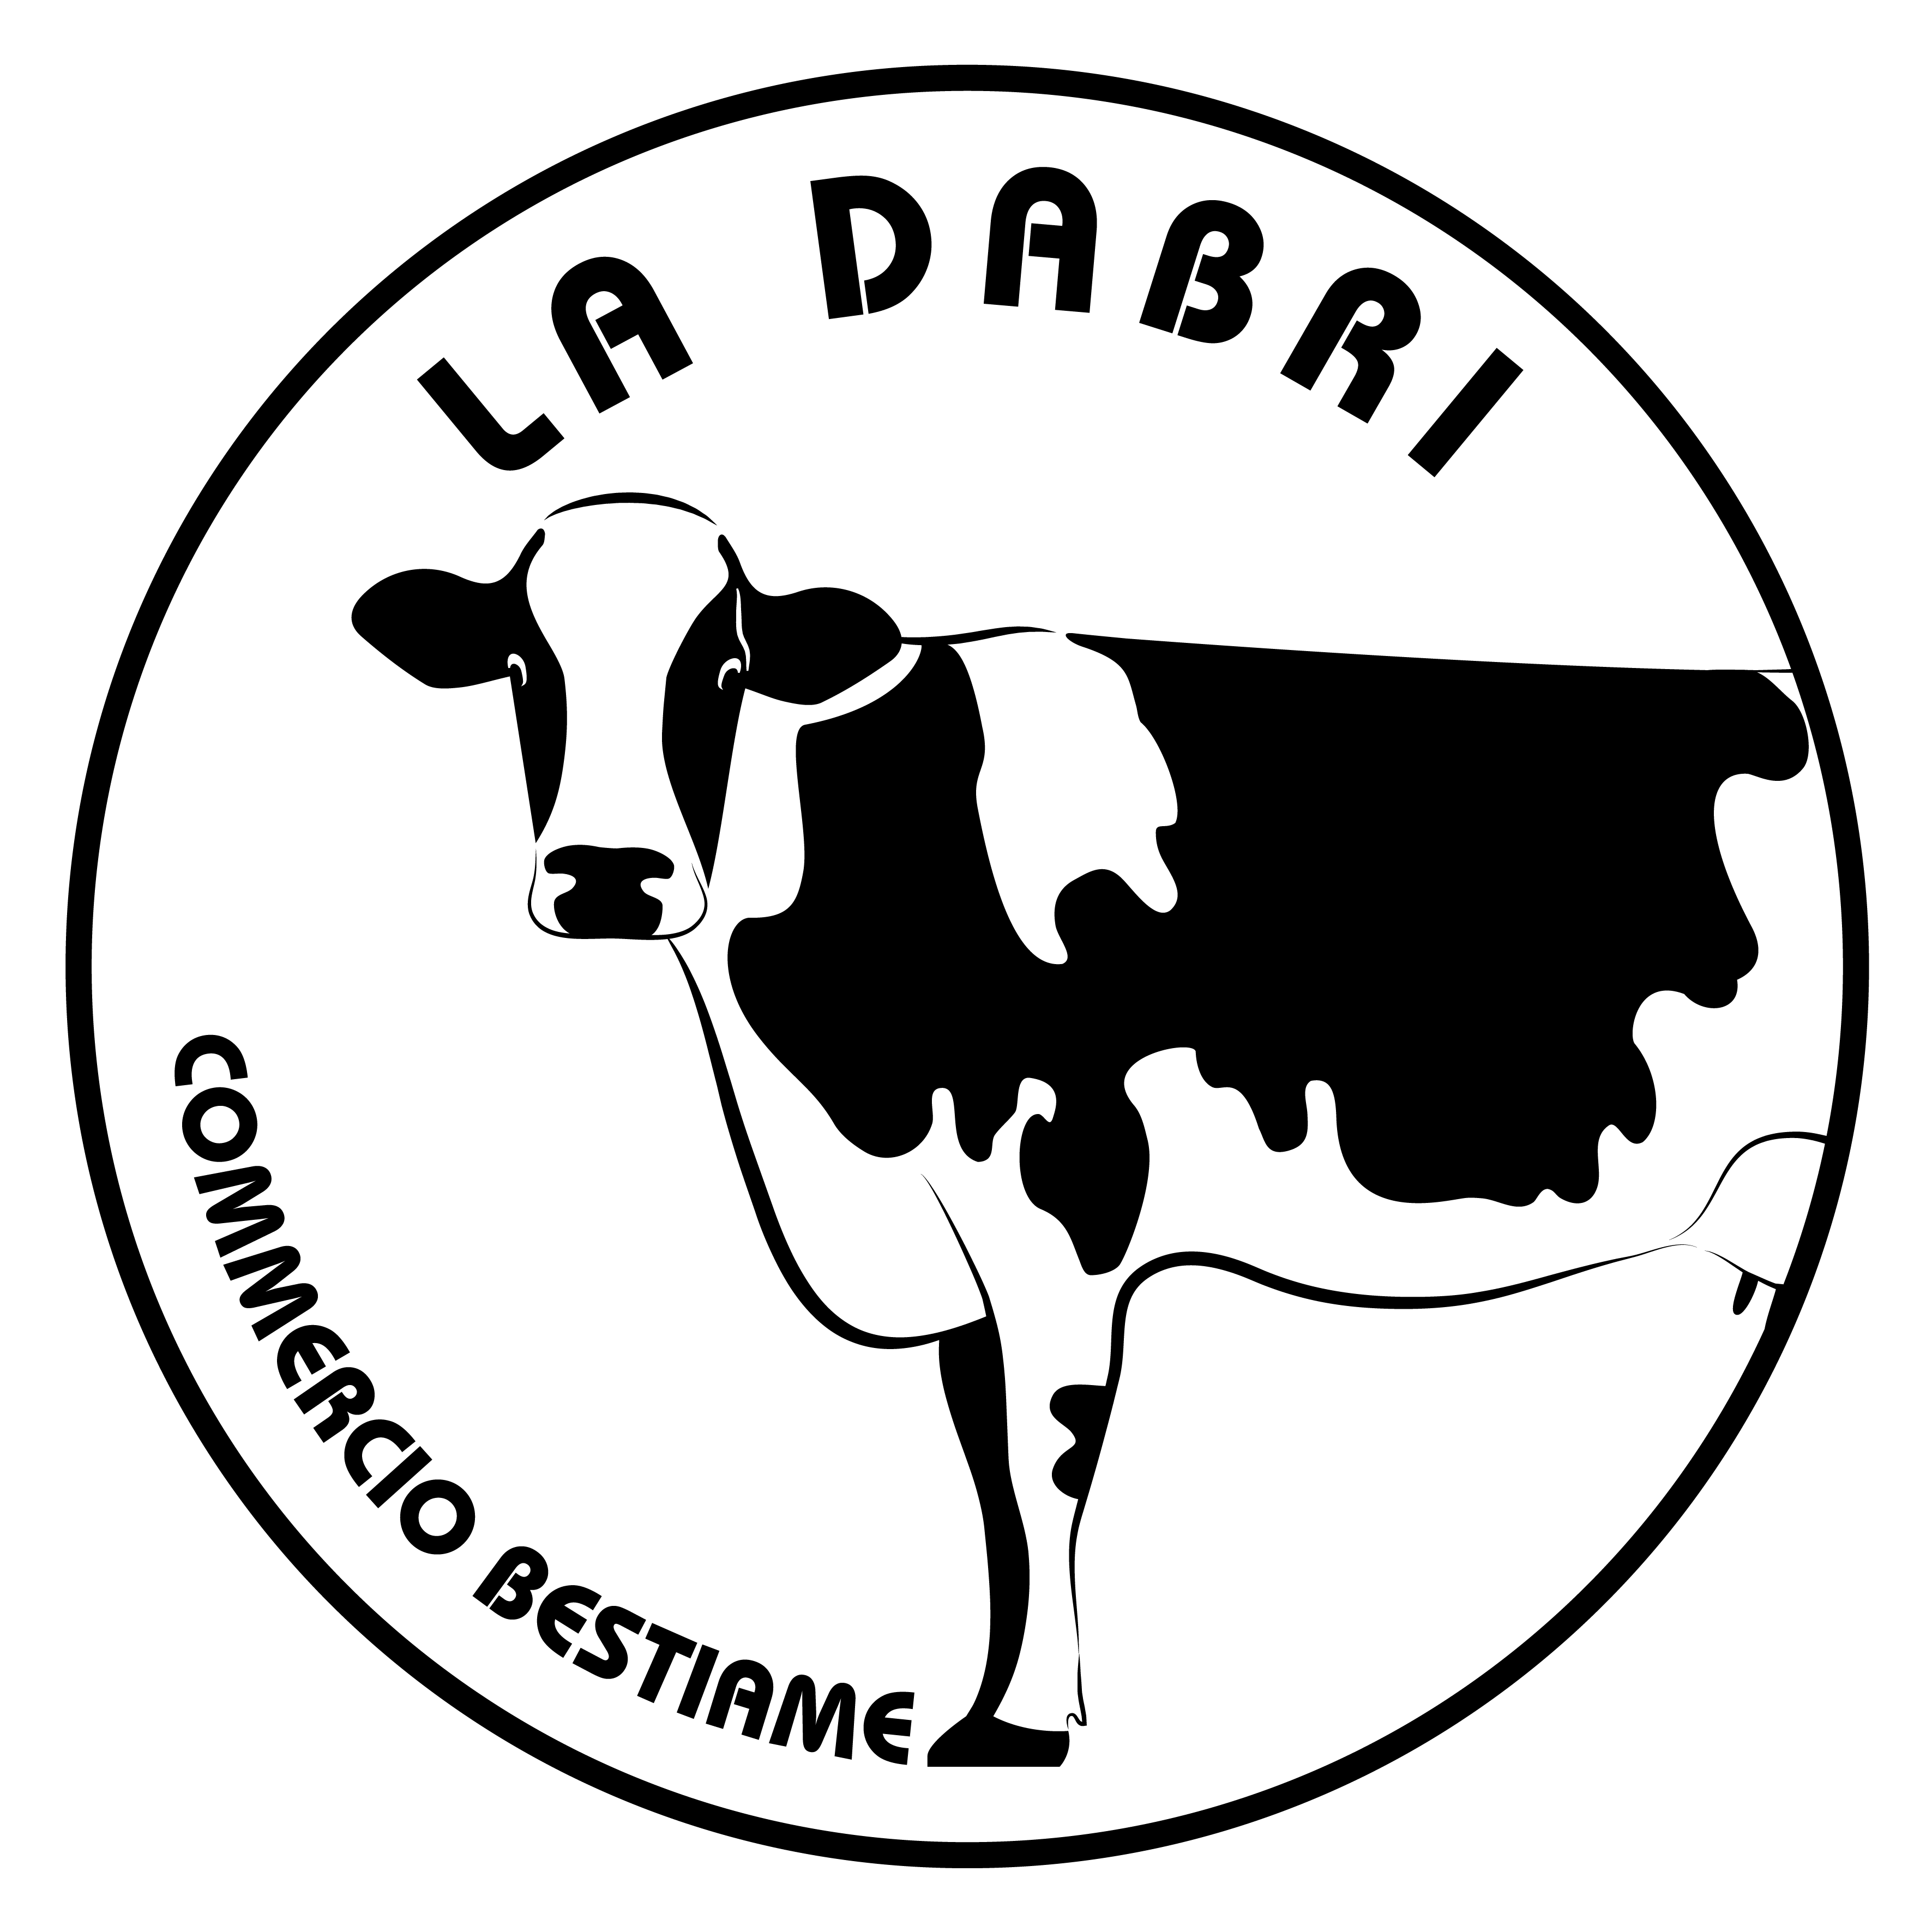 La Dabri